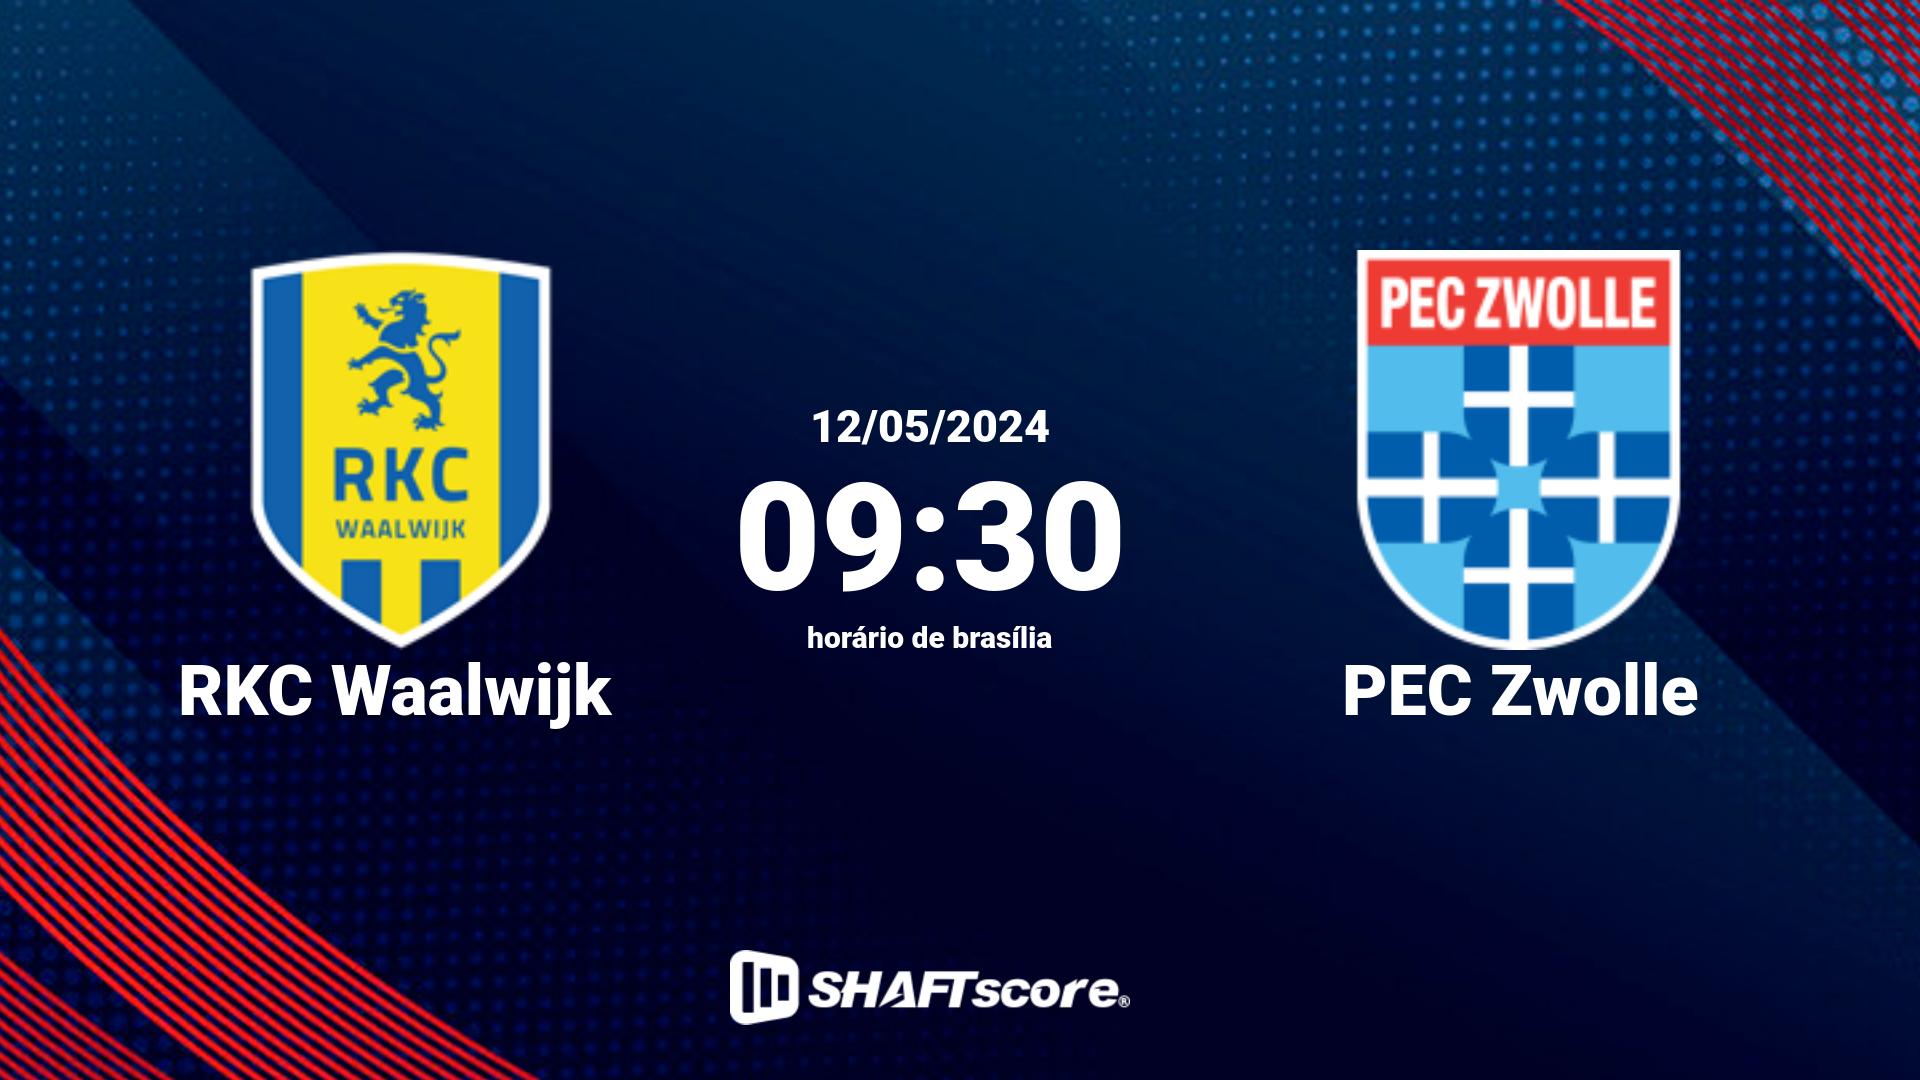 Estatísticas do jogo RKC Waalwijk vs PEC Zwolle 12.05 09:30